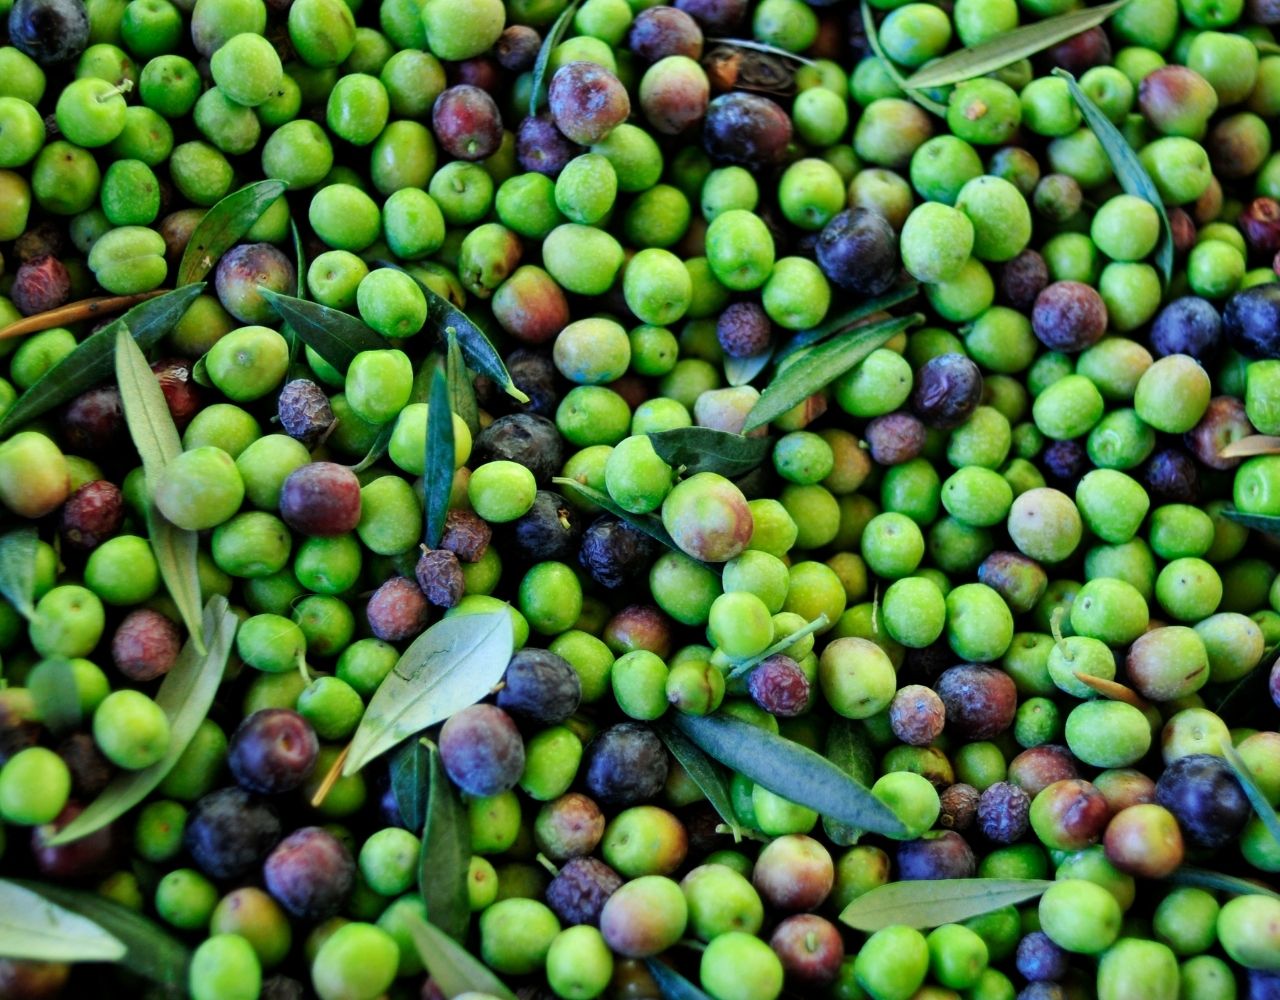 Arbequina olives